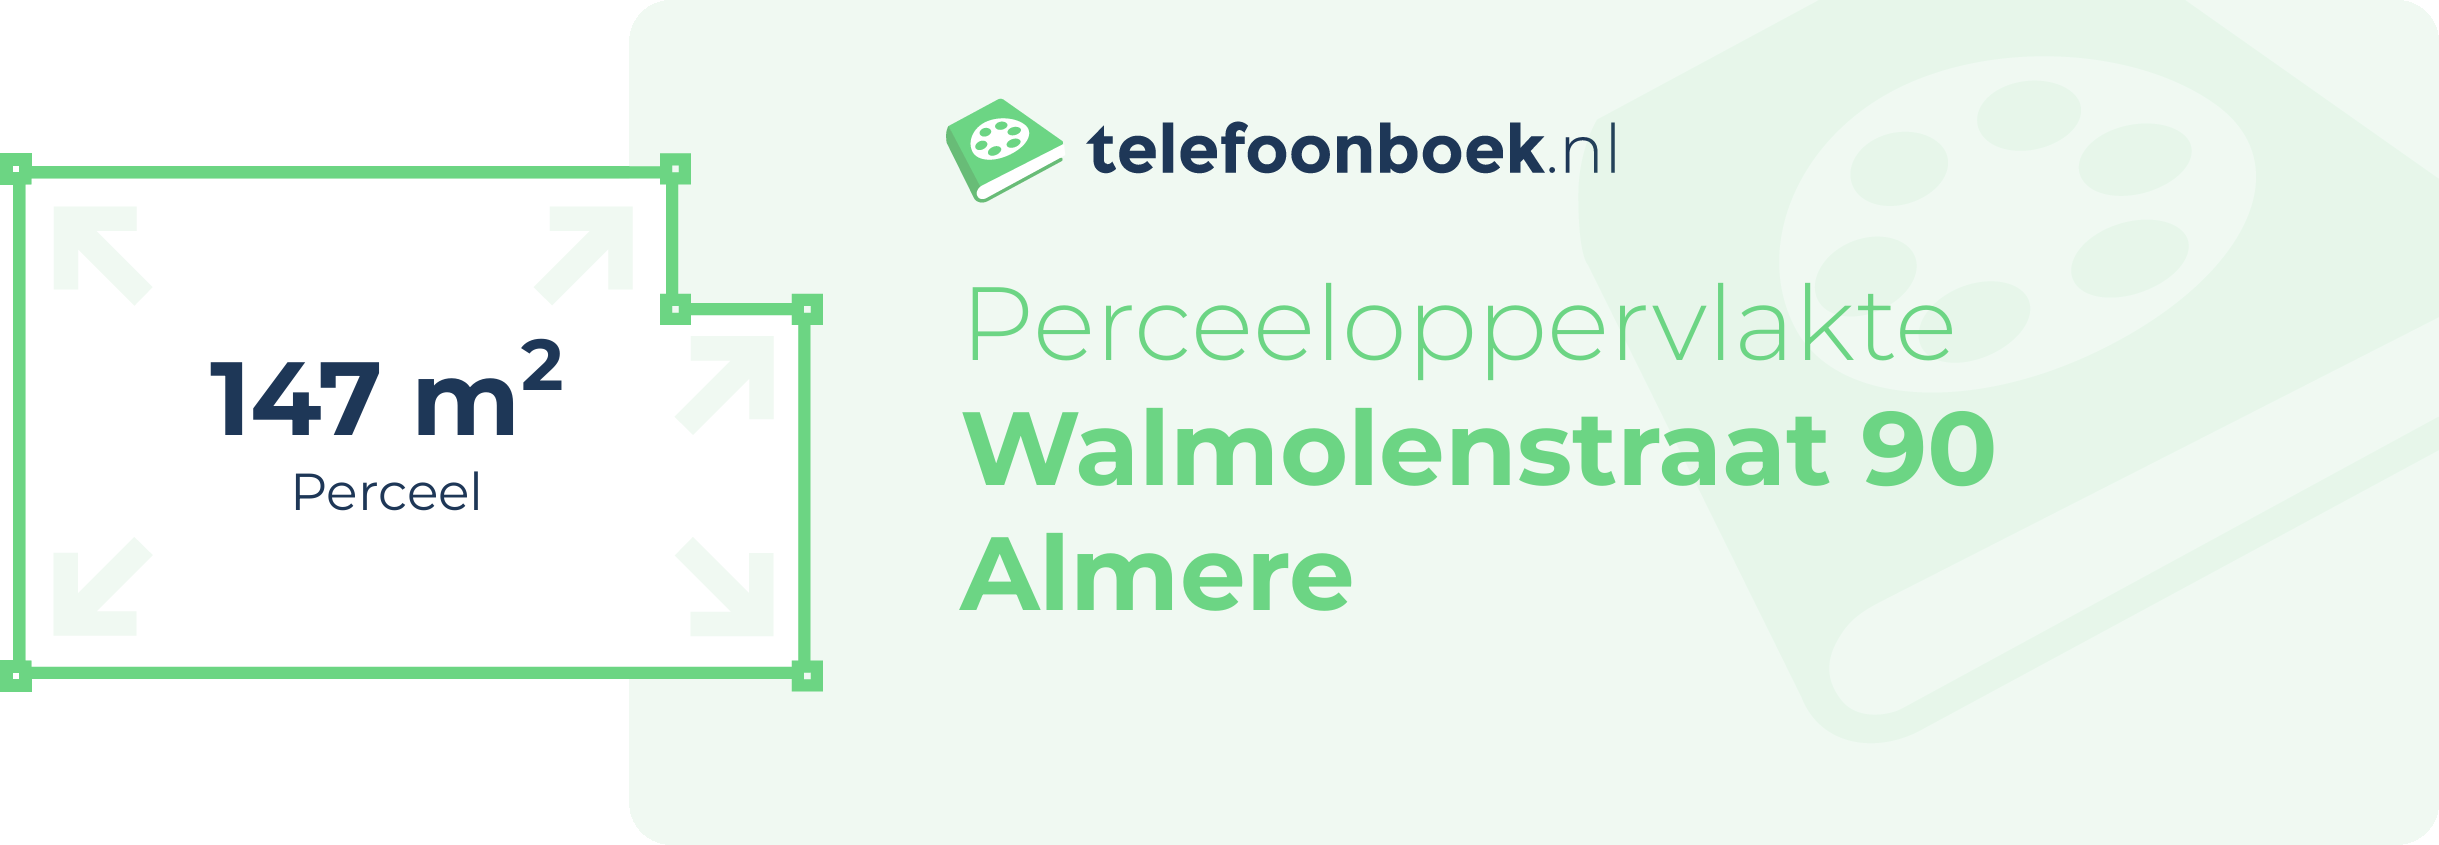 Perceeloppervlakte Walmolenstraat 90 Almere